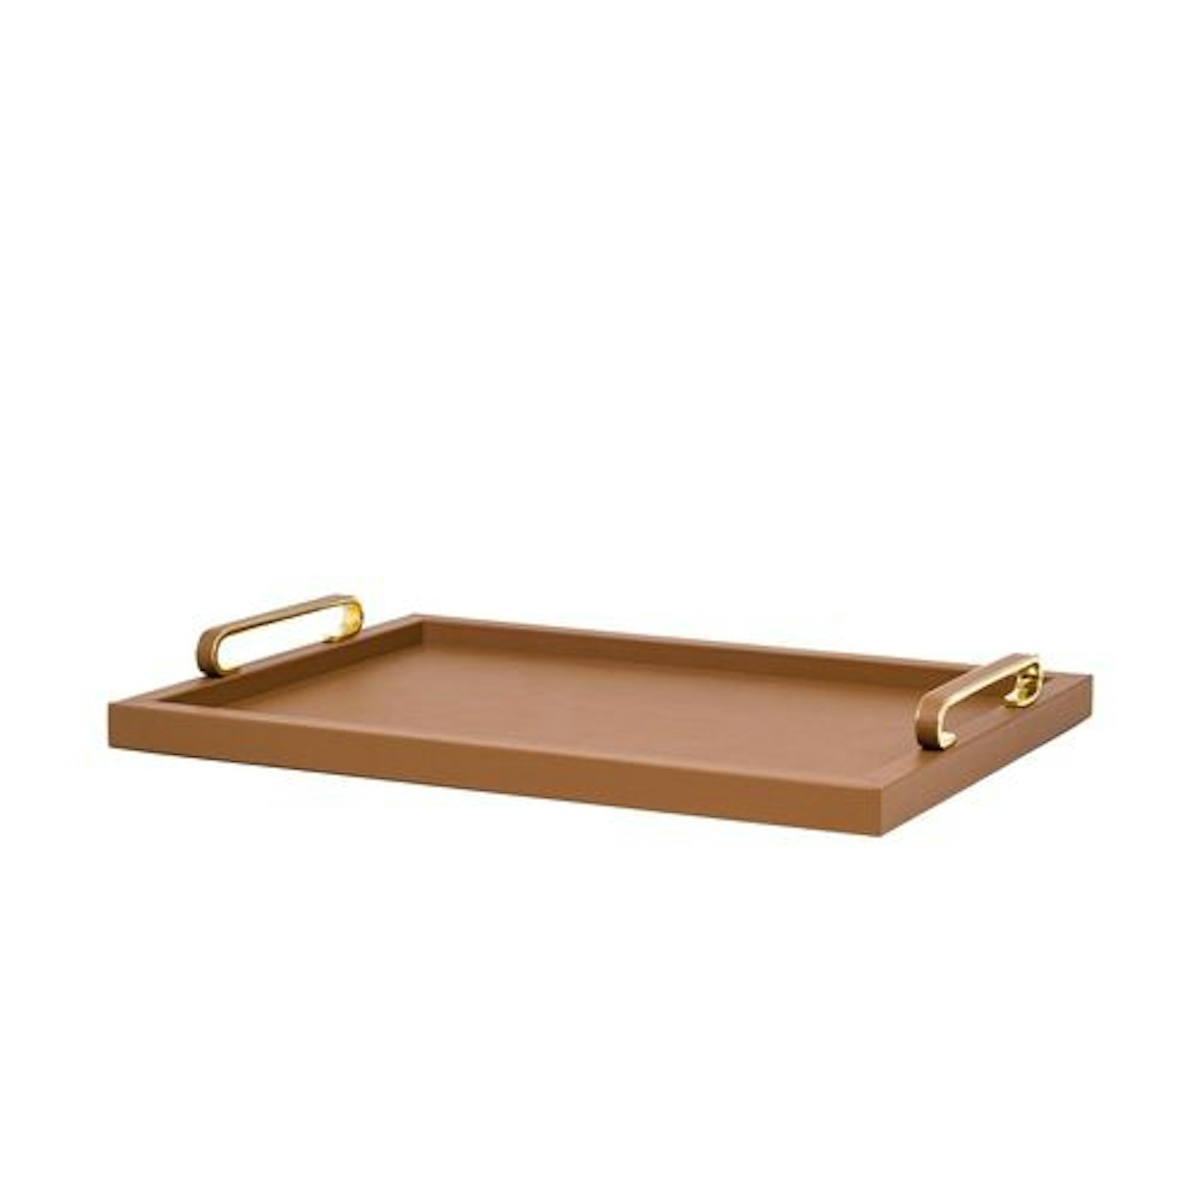 Foscari Tray, Orange - 21 Best Decorative Trays To Buy For Your Tabletop - LuxDeco.com